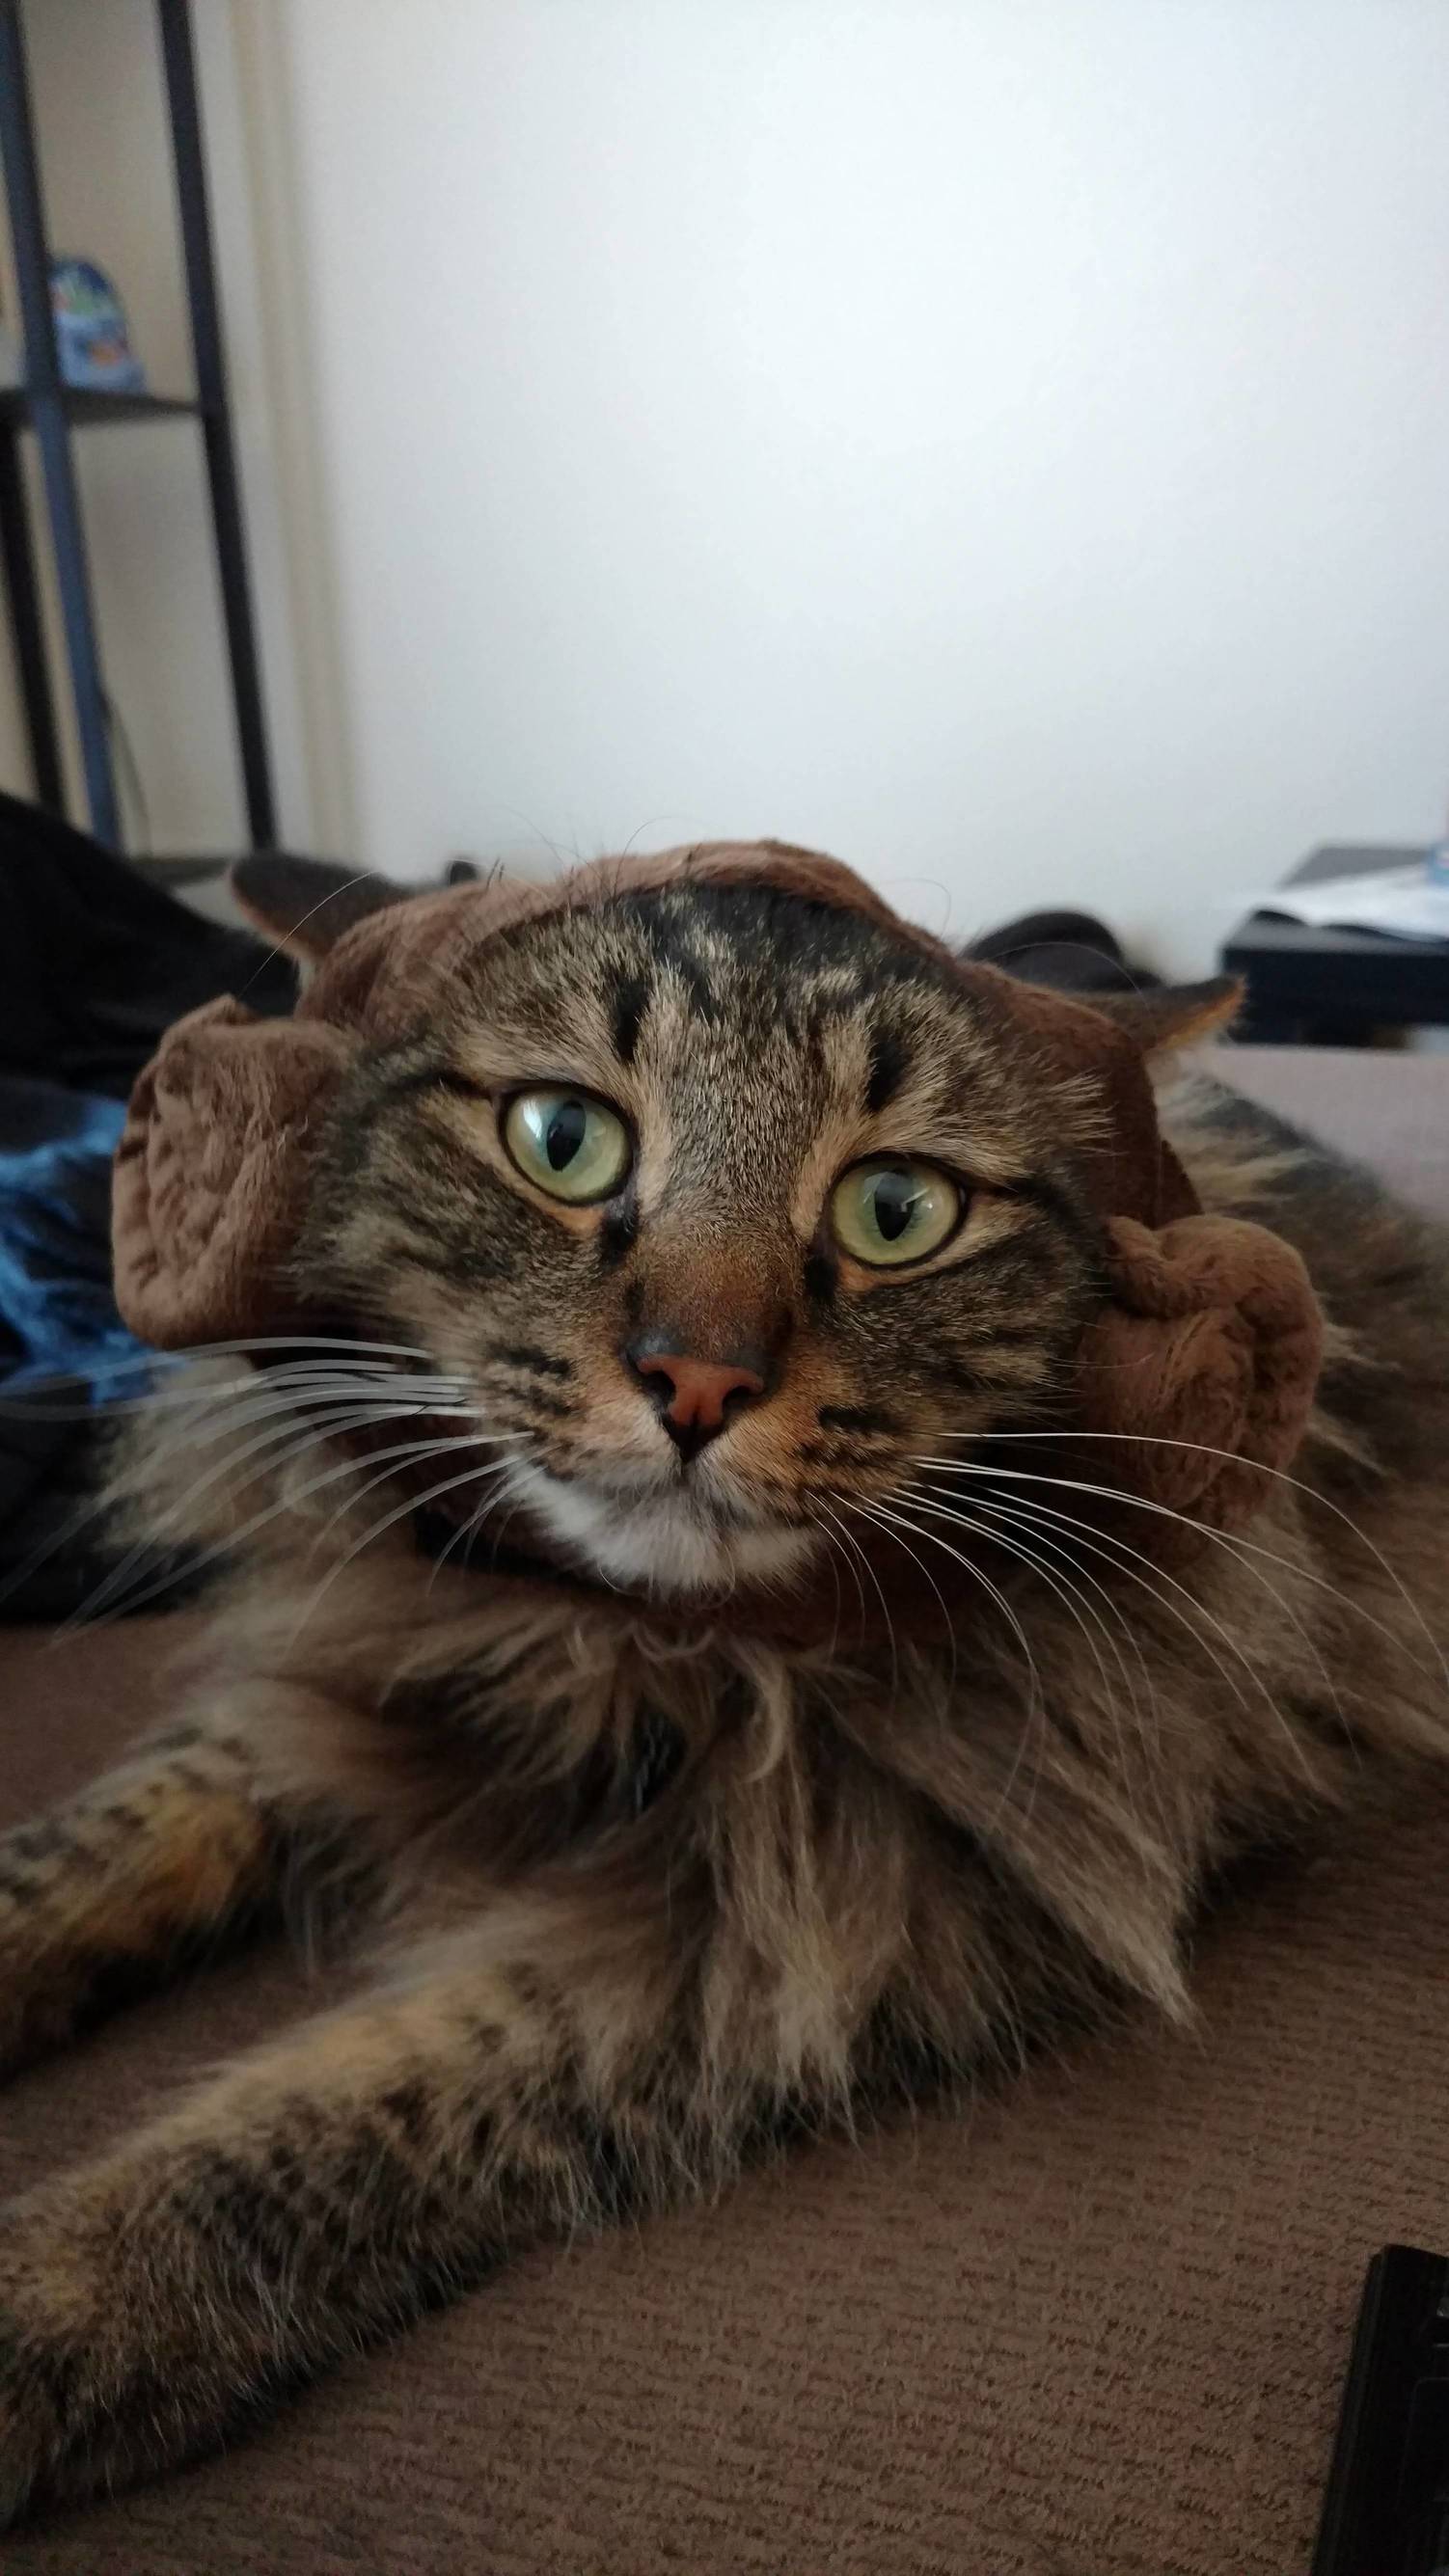 My cat allowed me to live after i put princess leia buns on him